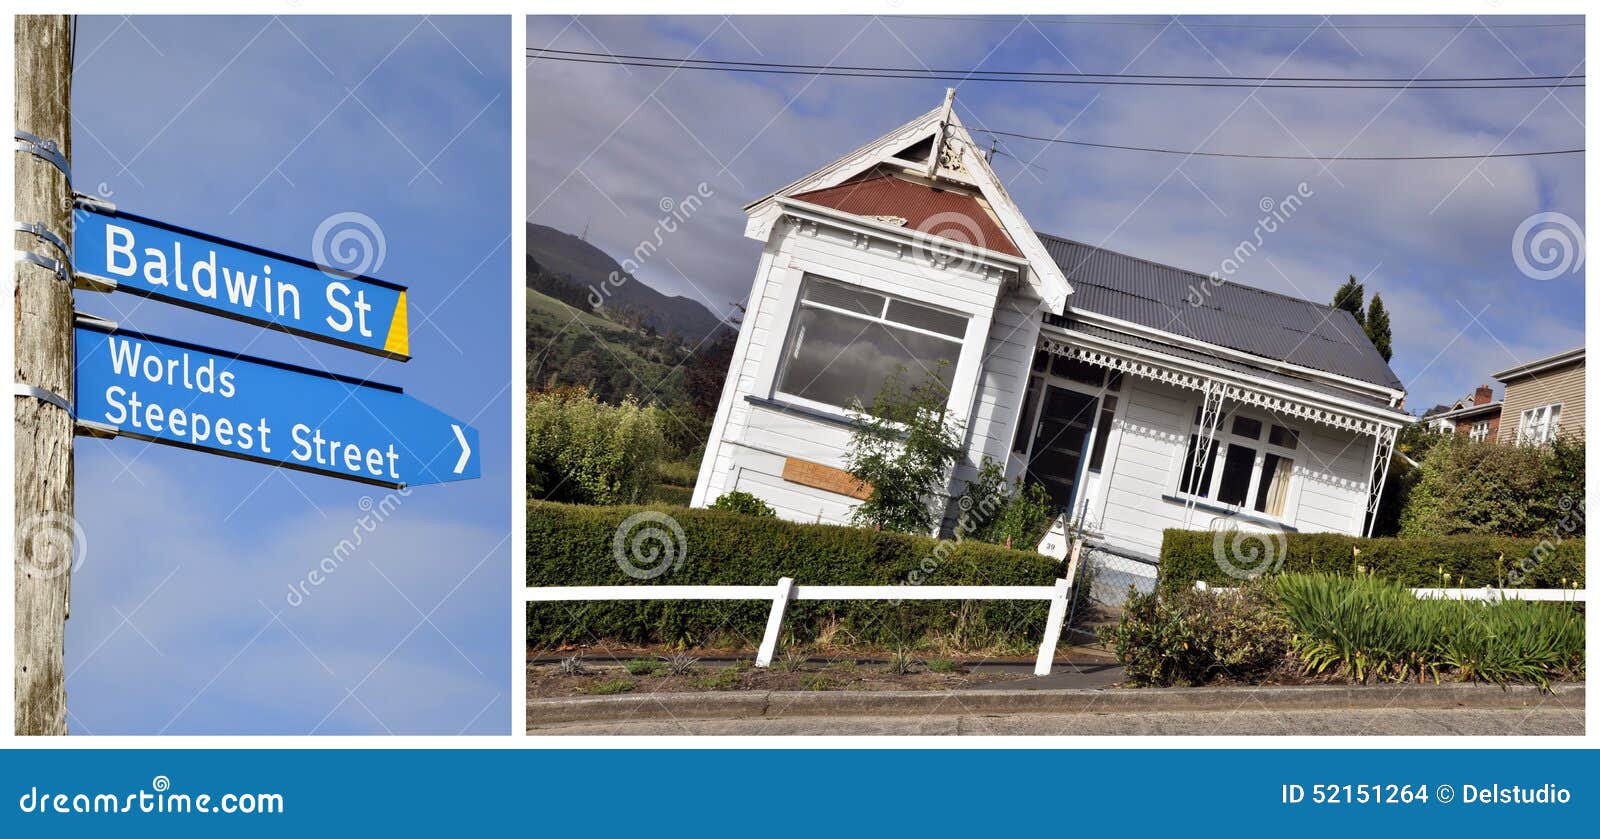 Baldwin Street, Dunedin, New Zealand Stock Photo - Image: 52151264